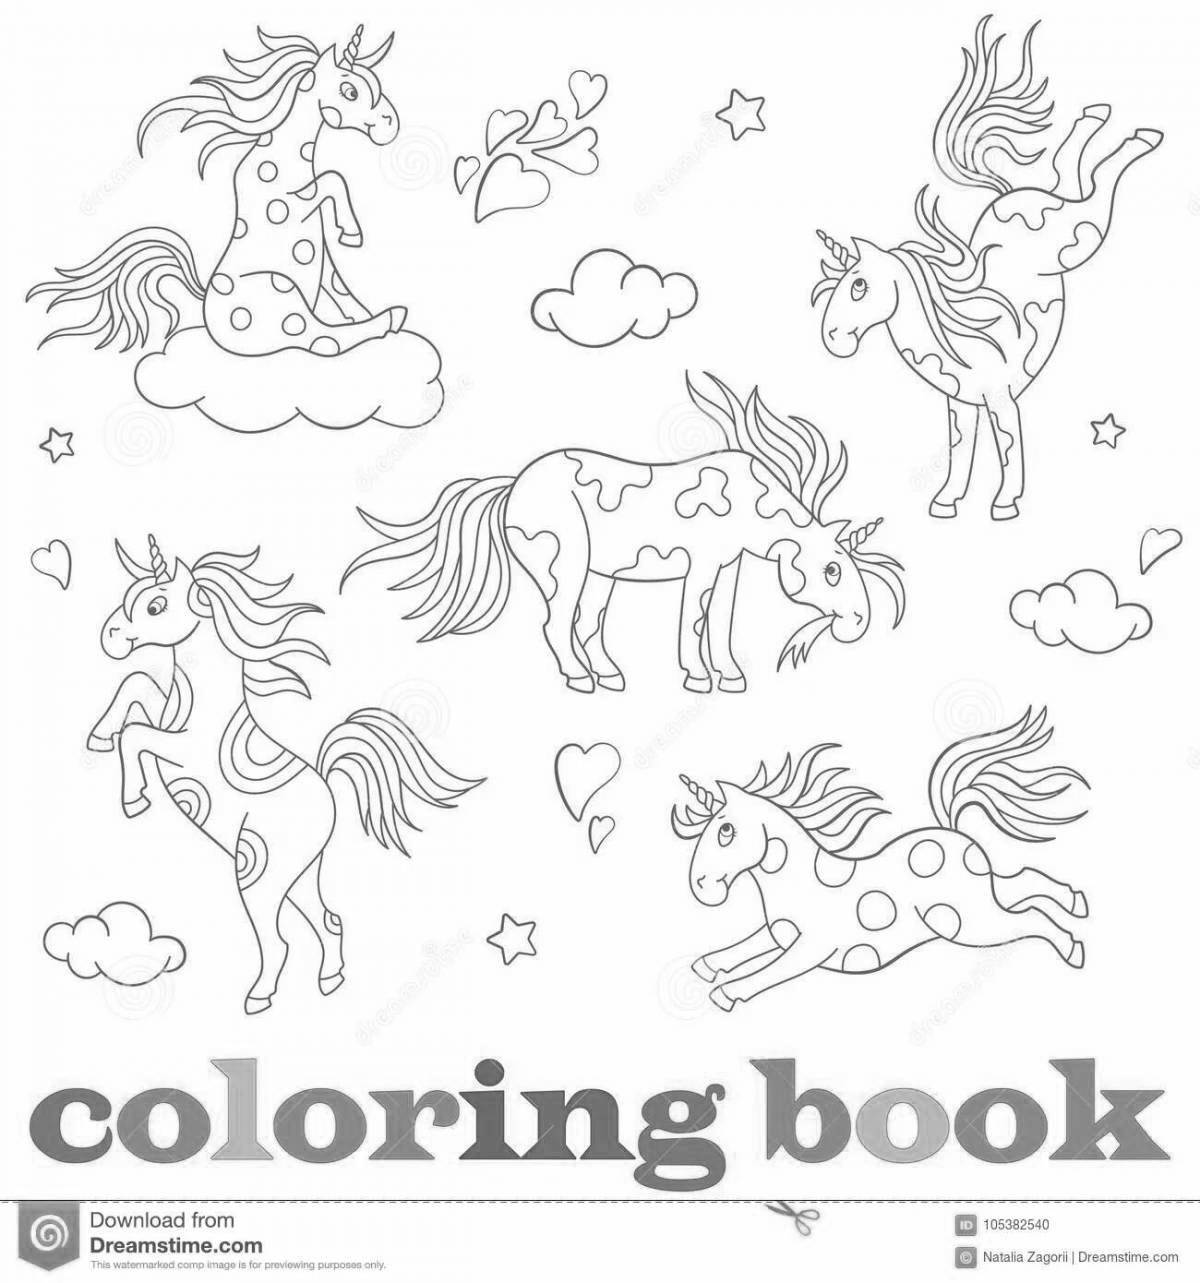 Fancy coloring of many unicorns